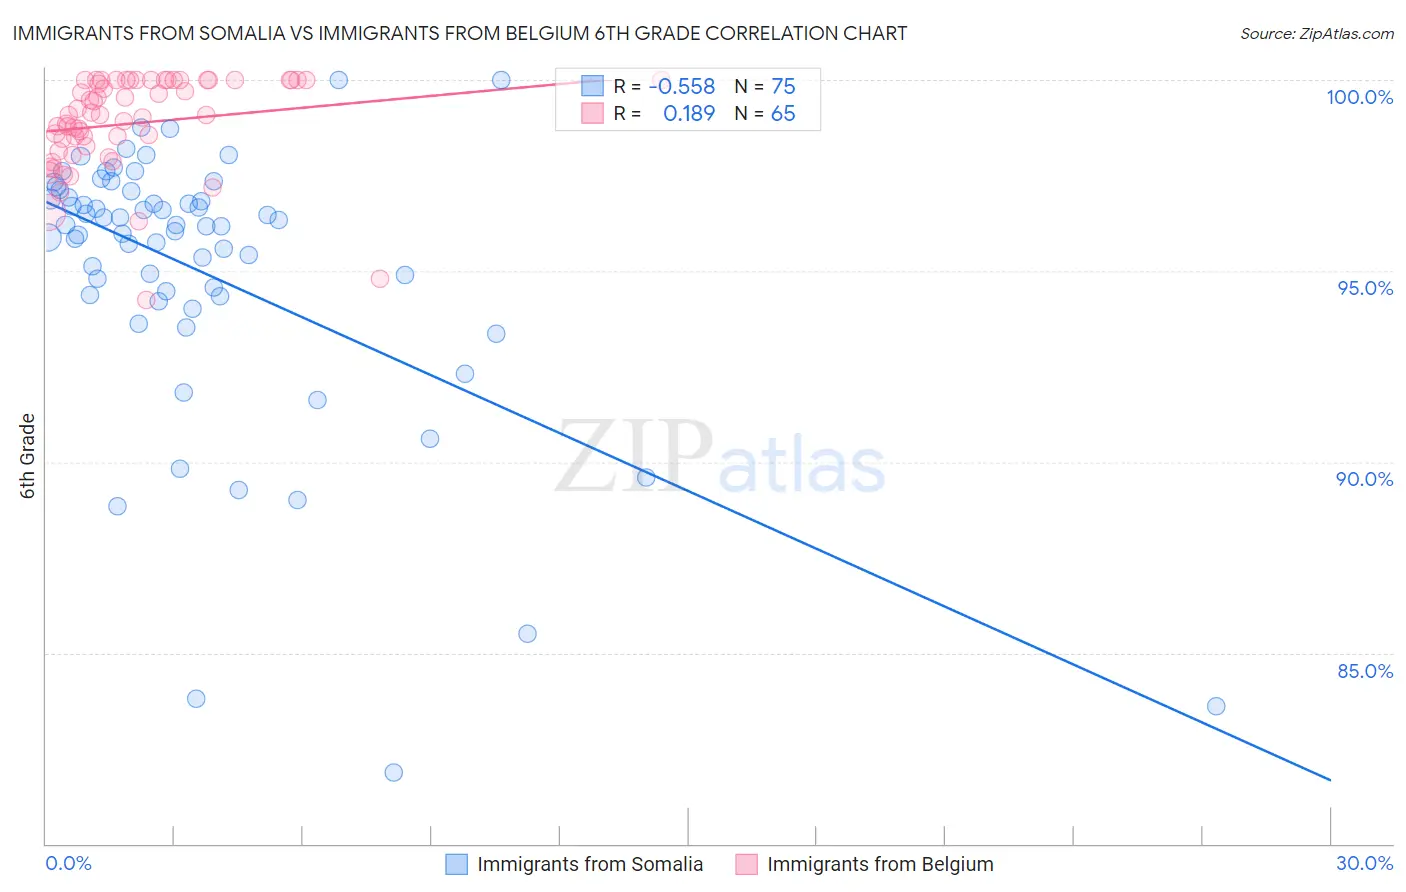 Immigrants from Somalia vs Immigrants from Belgium 6th Grade